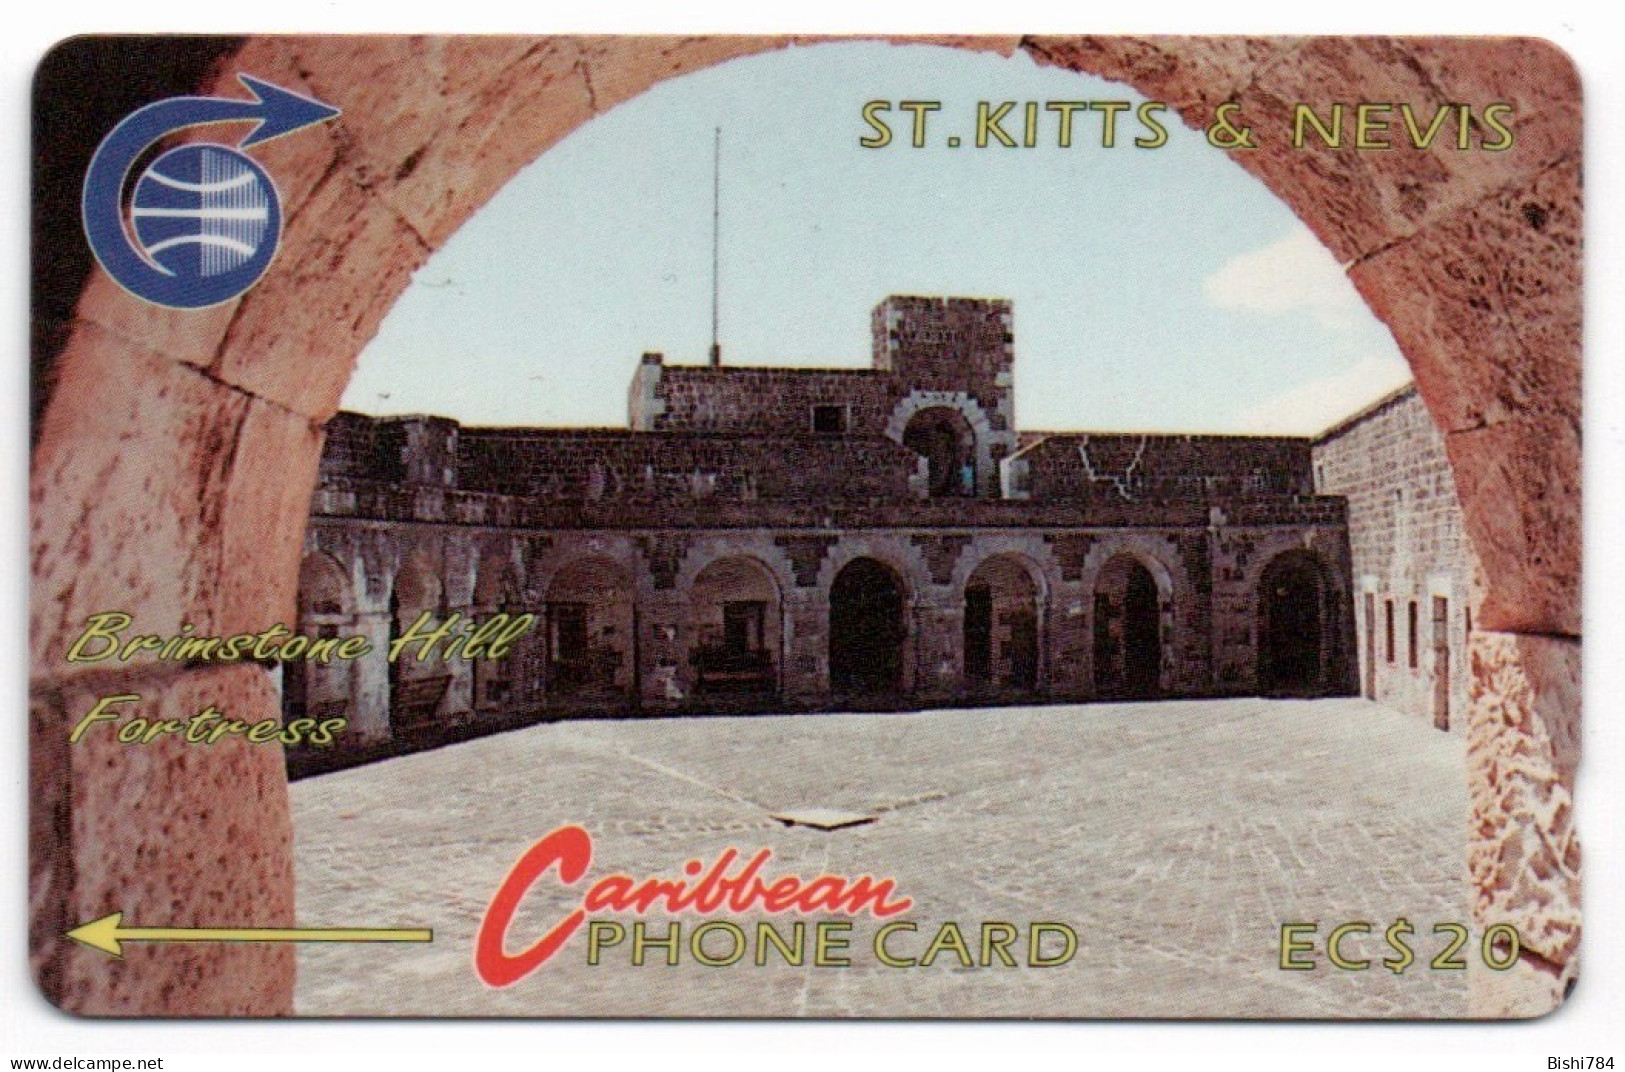 St. Kitts & Nevis - Brimstone Hill Fortress 2 - 3CSKB - St. Kitts En Nevis